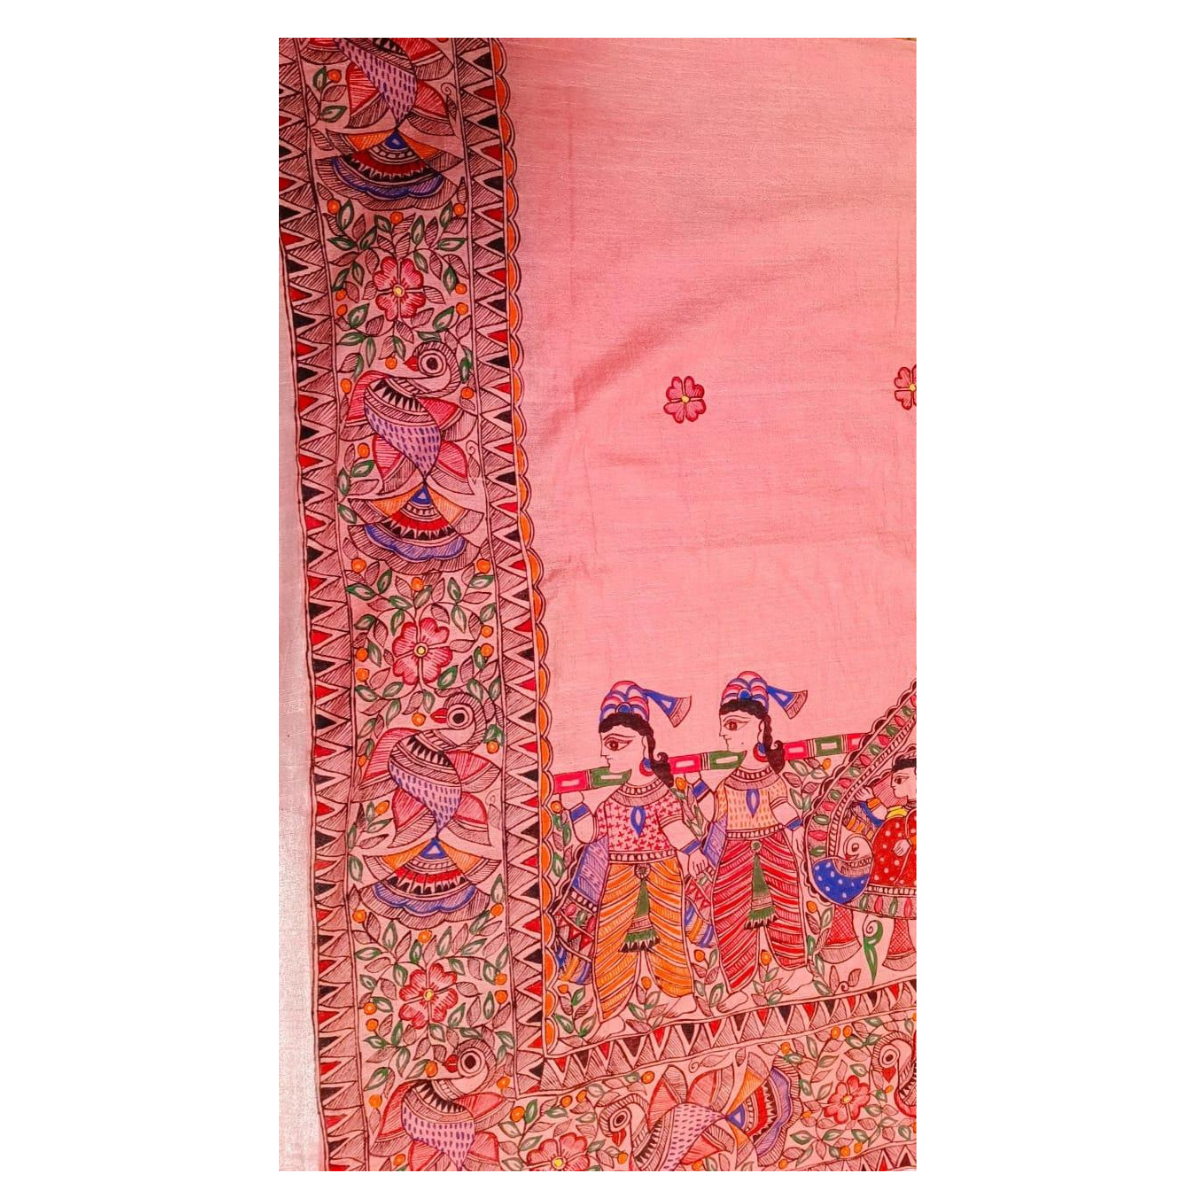 Off-White Linen Saree with Madhubani Painting of Bride and Groom and "Sada Sawbhagyawati Reho